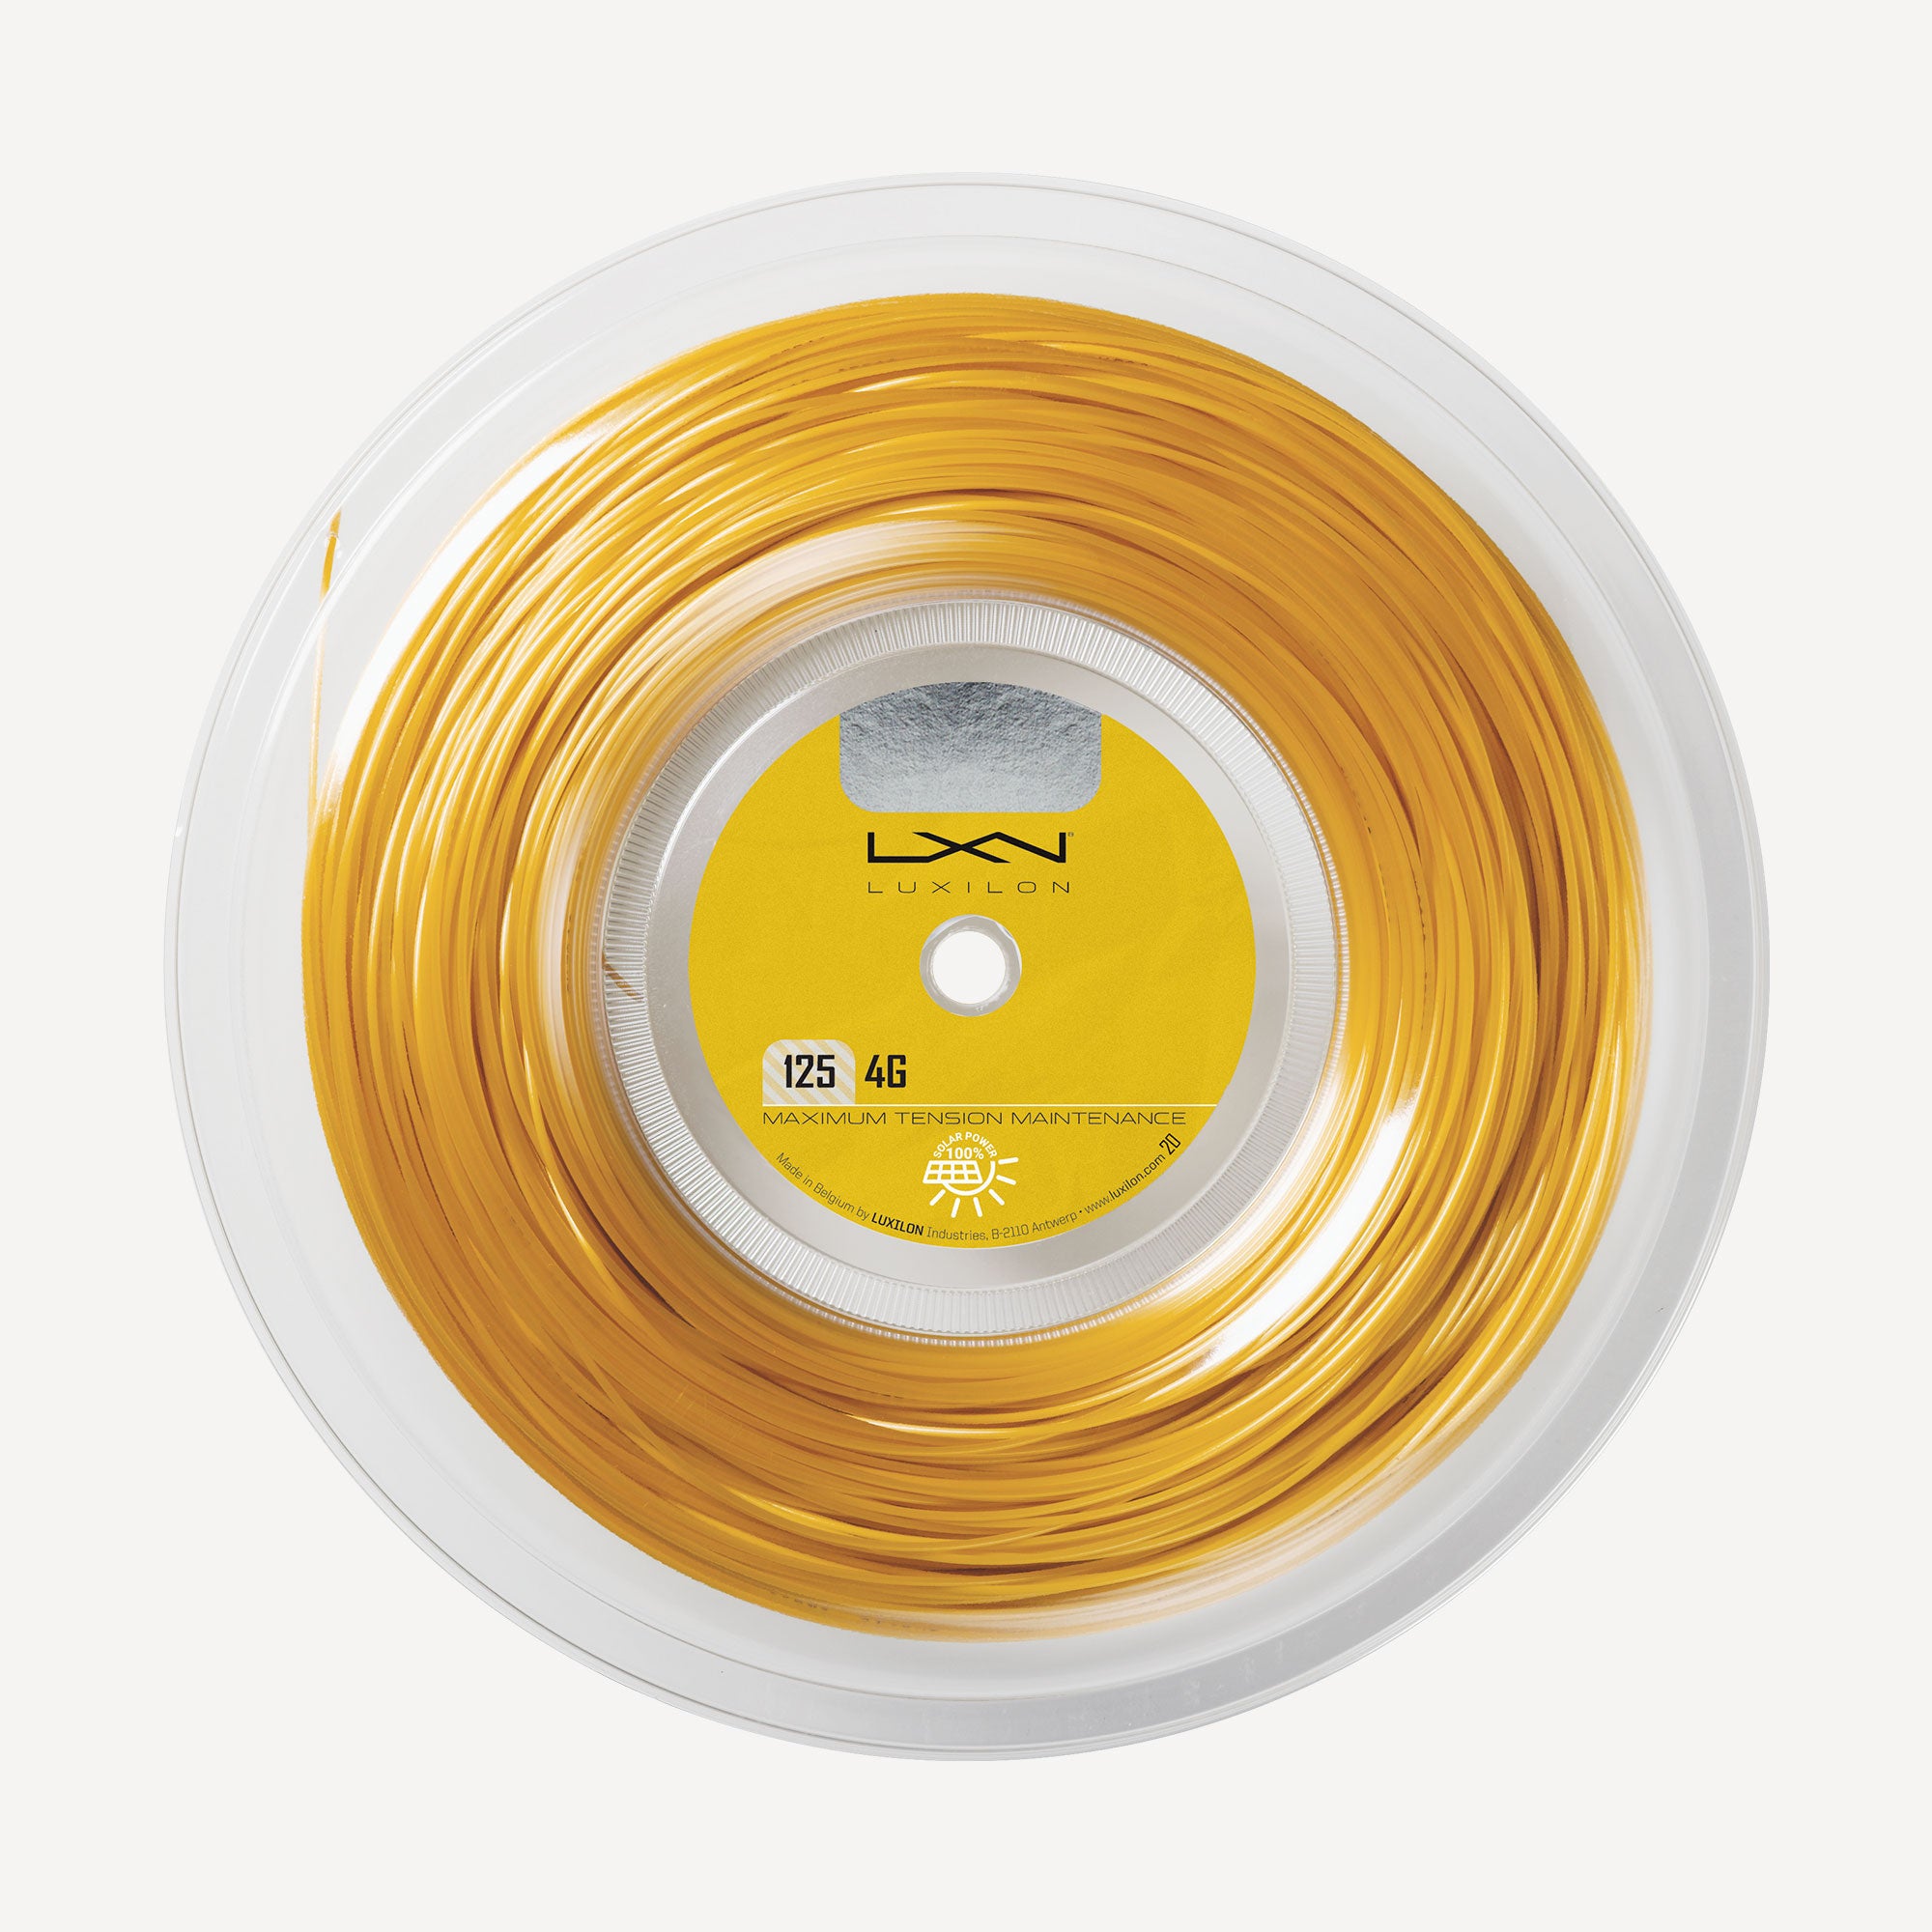 Luxilon 4G Tennis String Reel 200 m - Gold